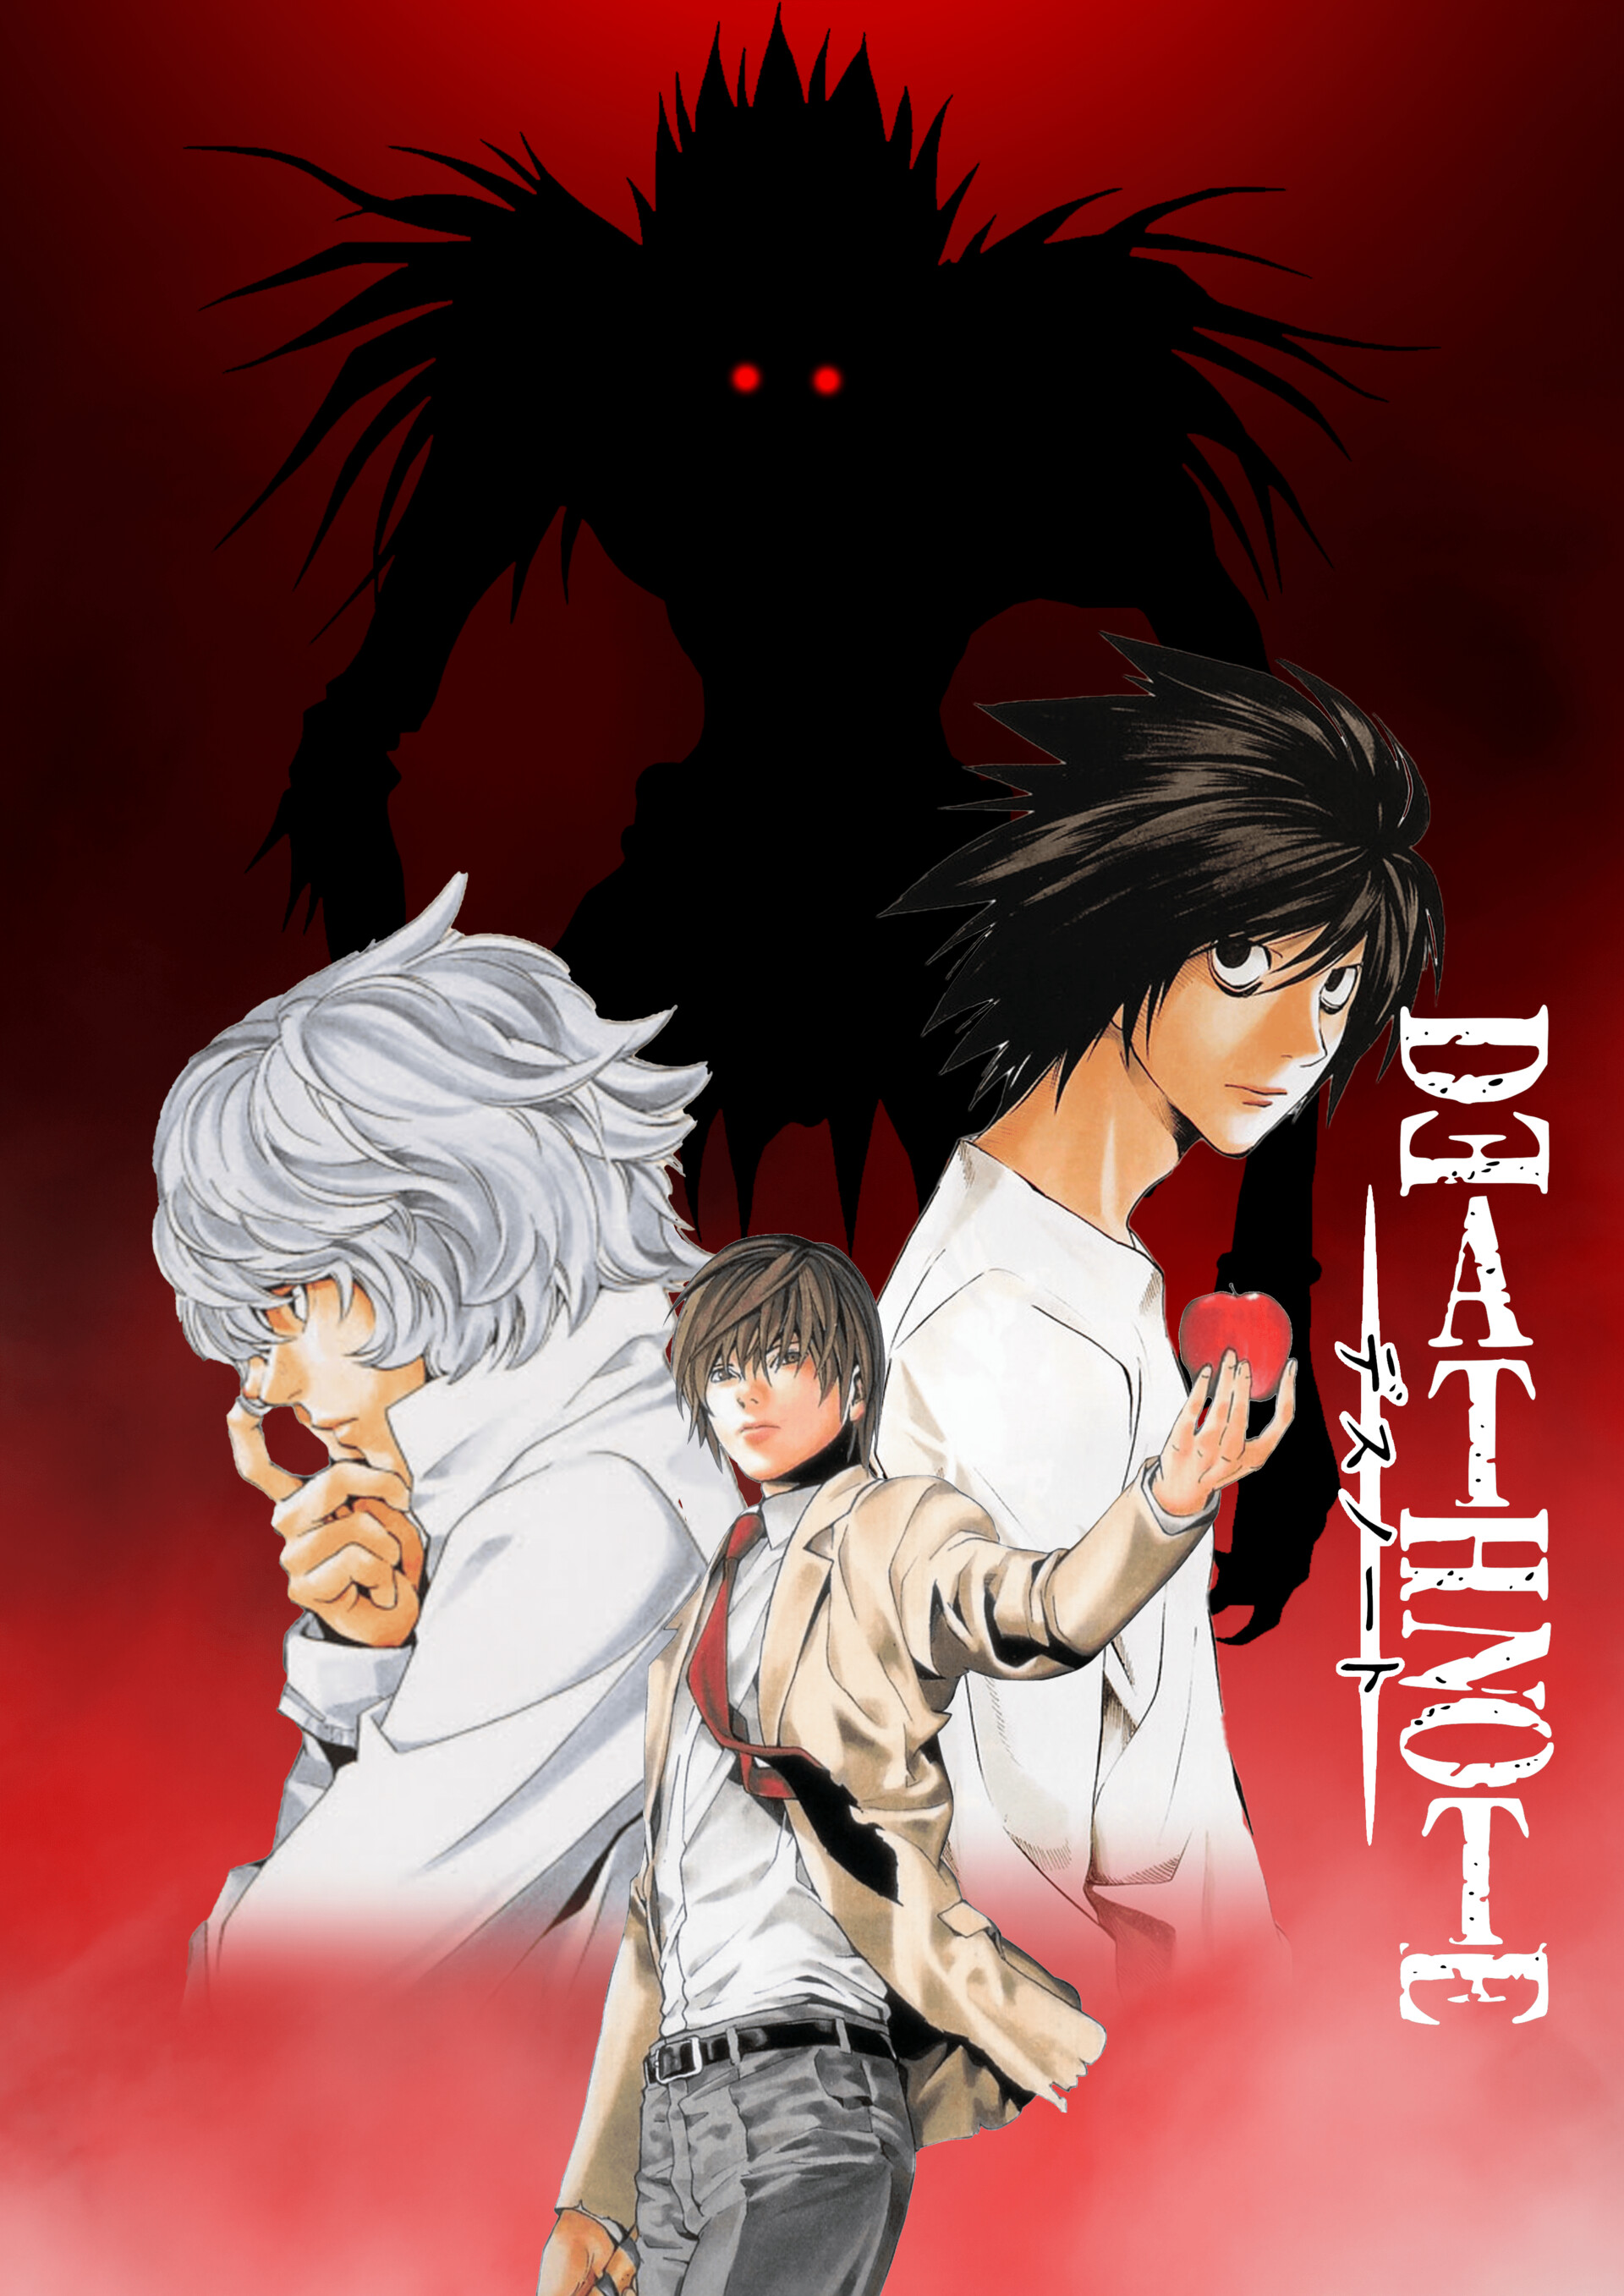 ArtStation - Death note anime poster